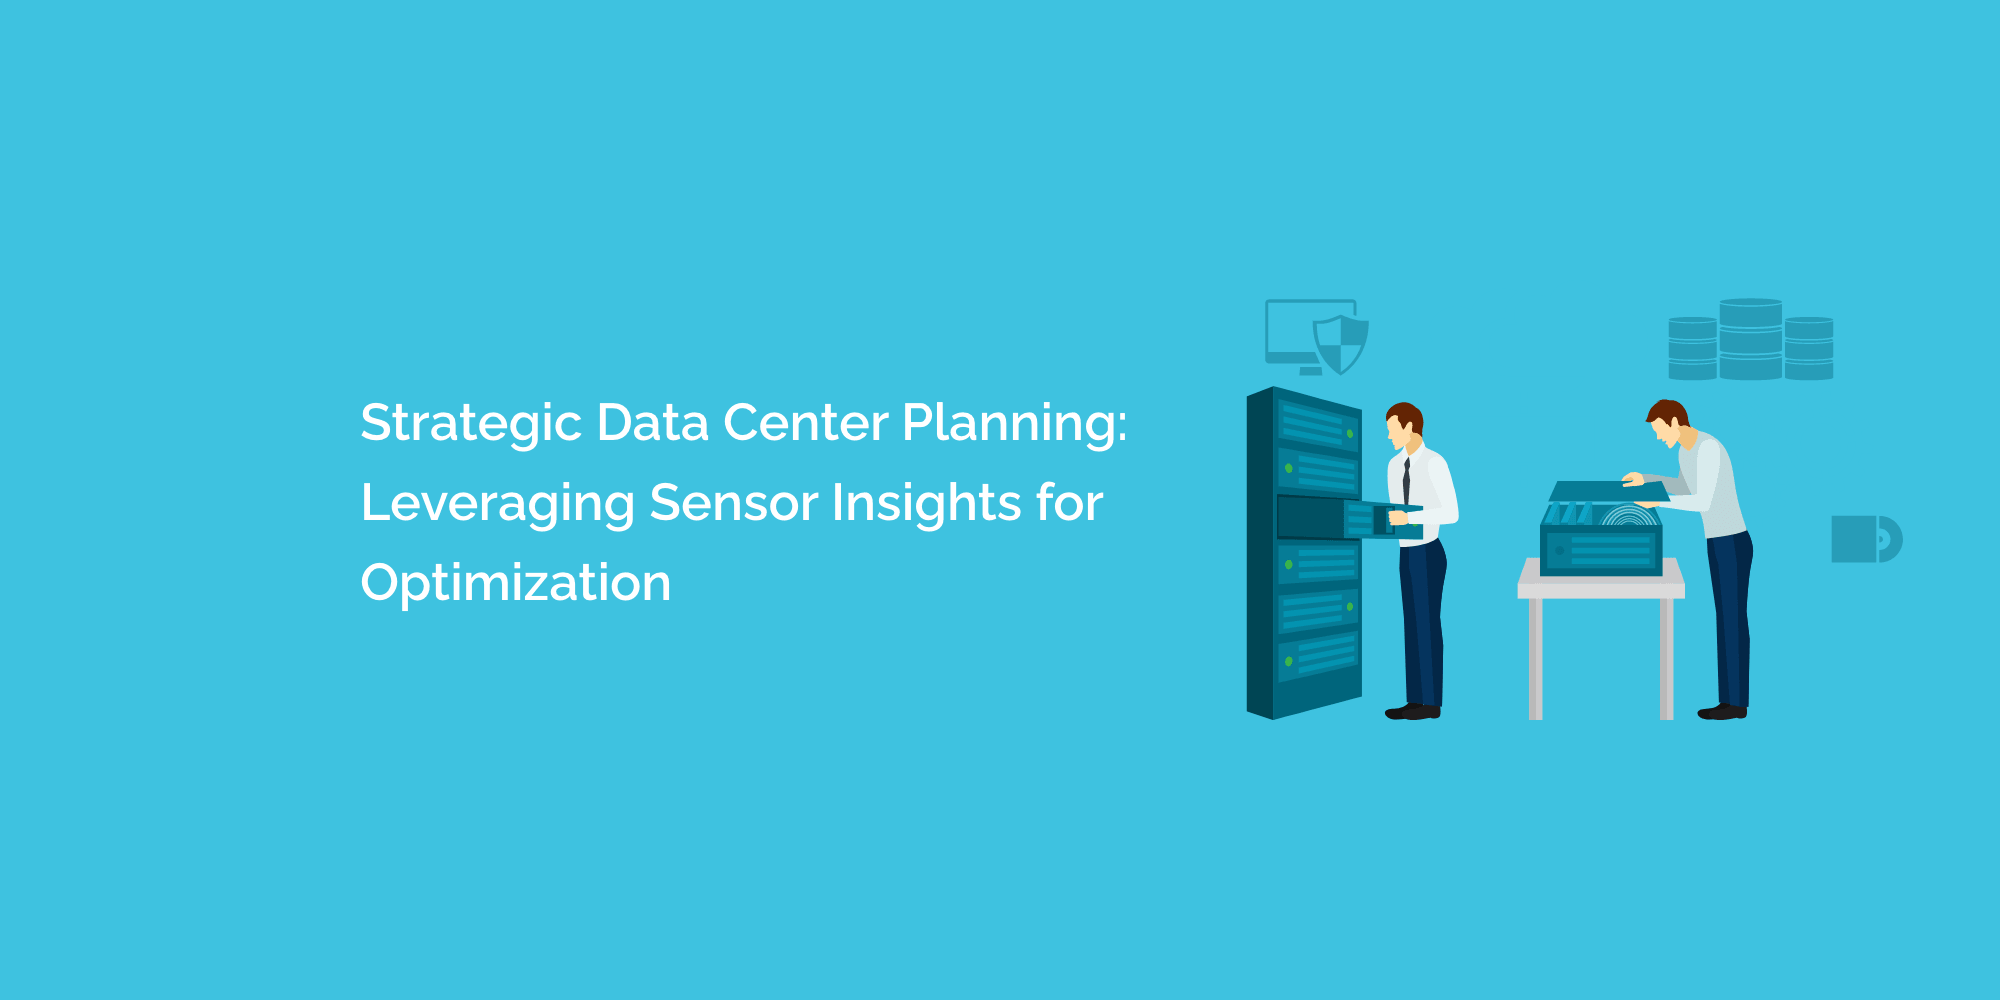 Strategic Data Center Planning: Leveraging Sensor Insights for Optimization